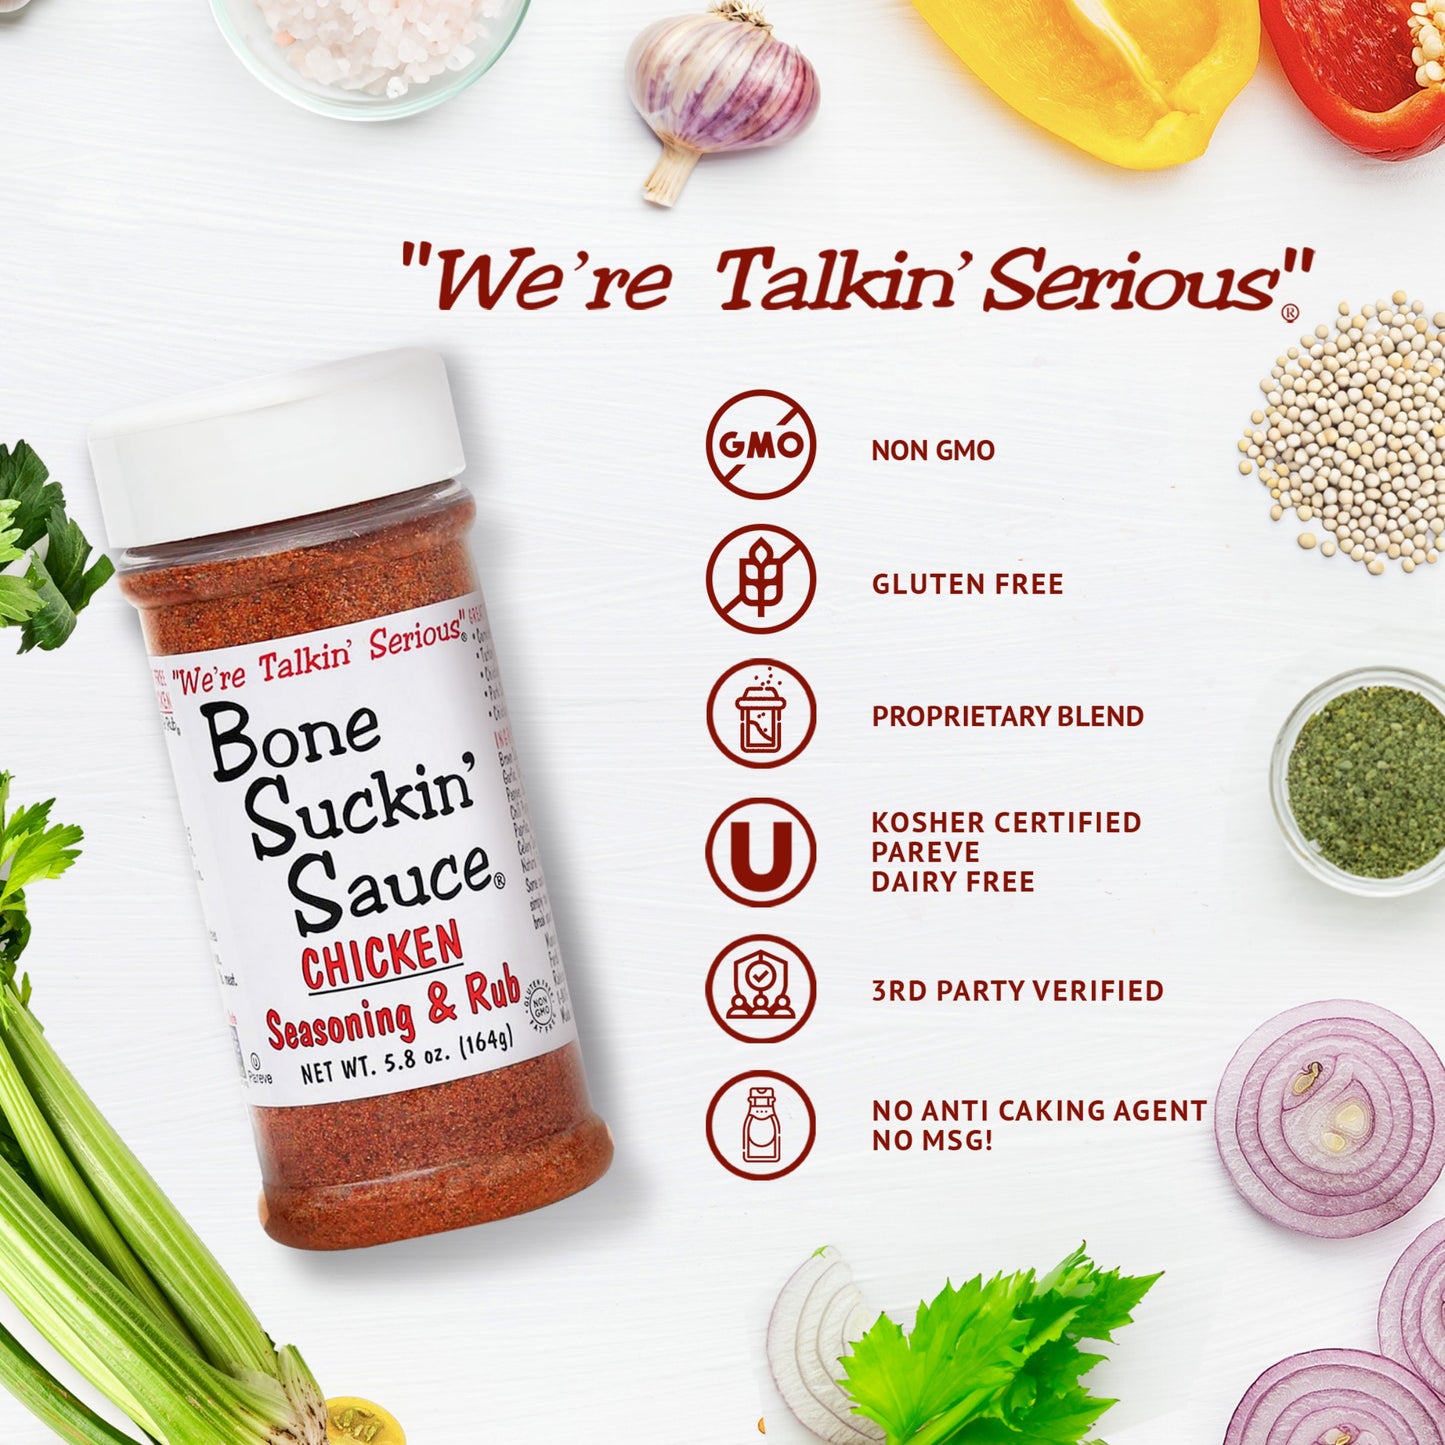 Bone Suckin'® Chicken Seasoning & Rub, 5.8 oz. Non Gmo, Gluten Free, Kosher Certified, Pareve, Dairy Free, 3rd Party Verified, No Anti Caking Agent and No MSG.